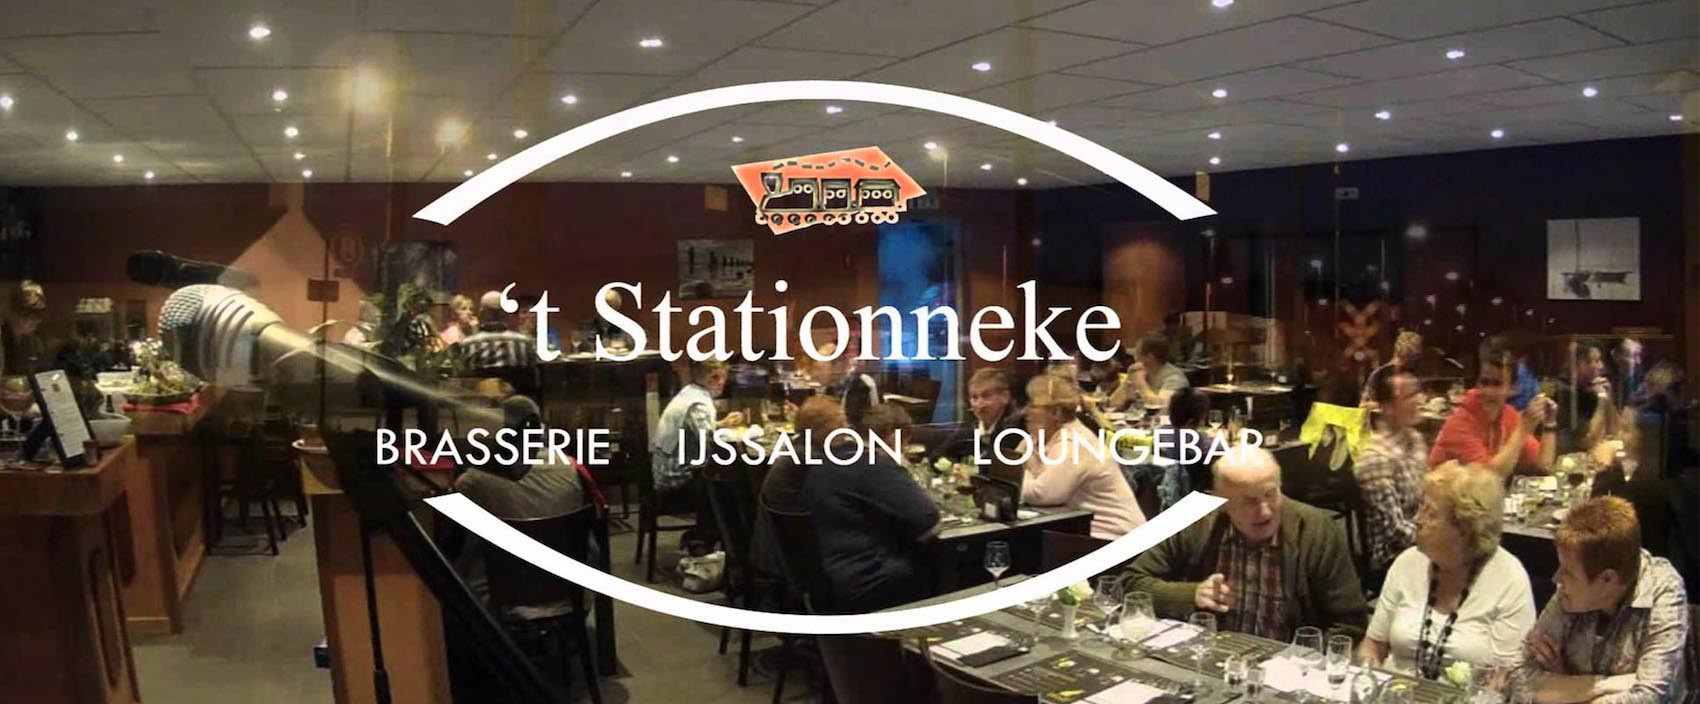 Header Brasserie 't Stationneke - IJssalon Heist-op-den-Berg